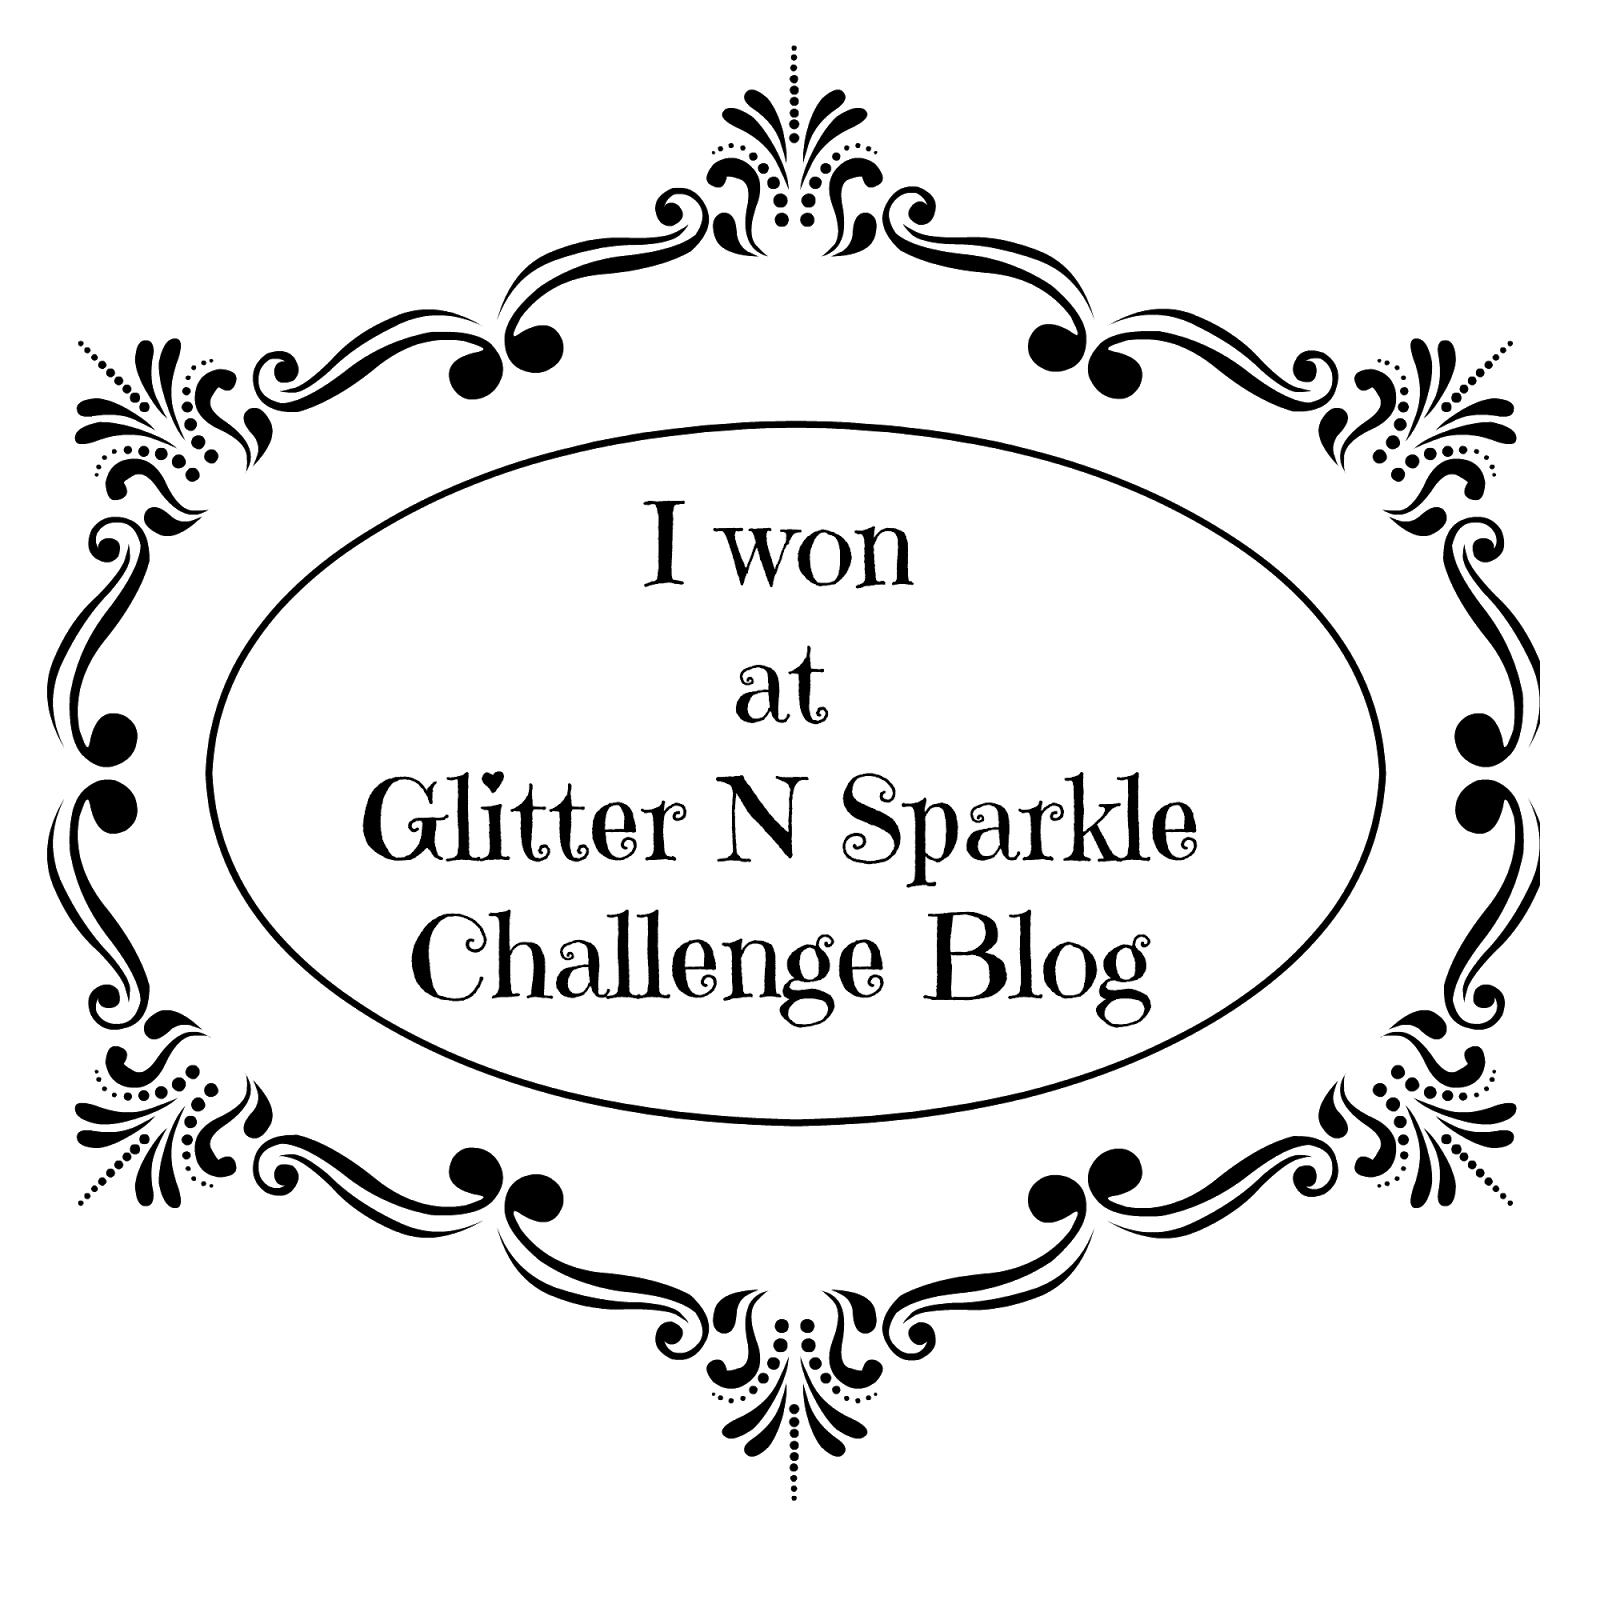 Yay I Won at Glitter N Sparkle